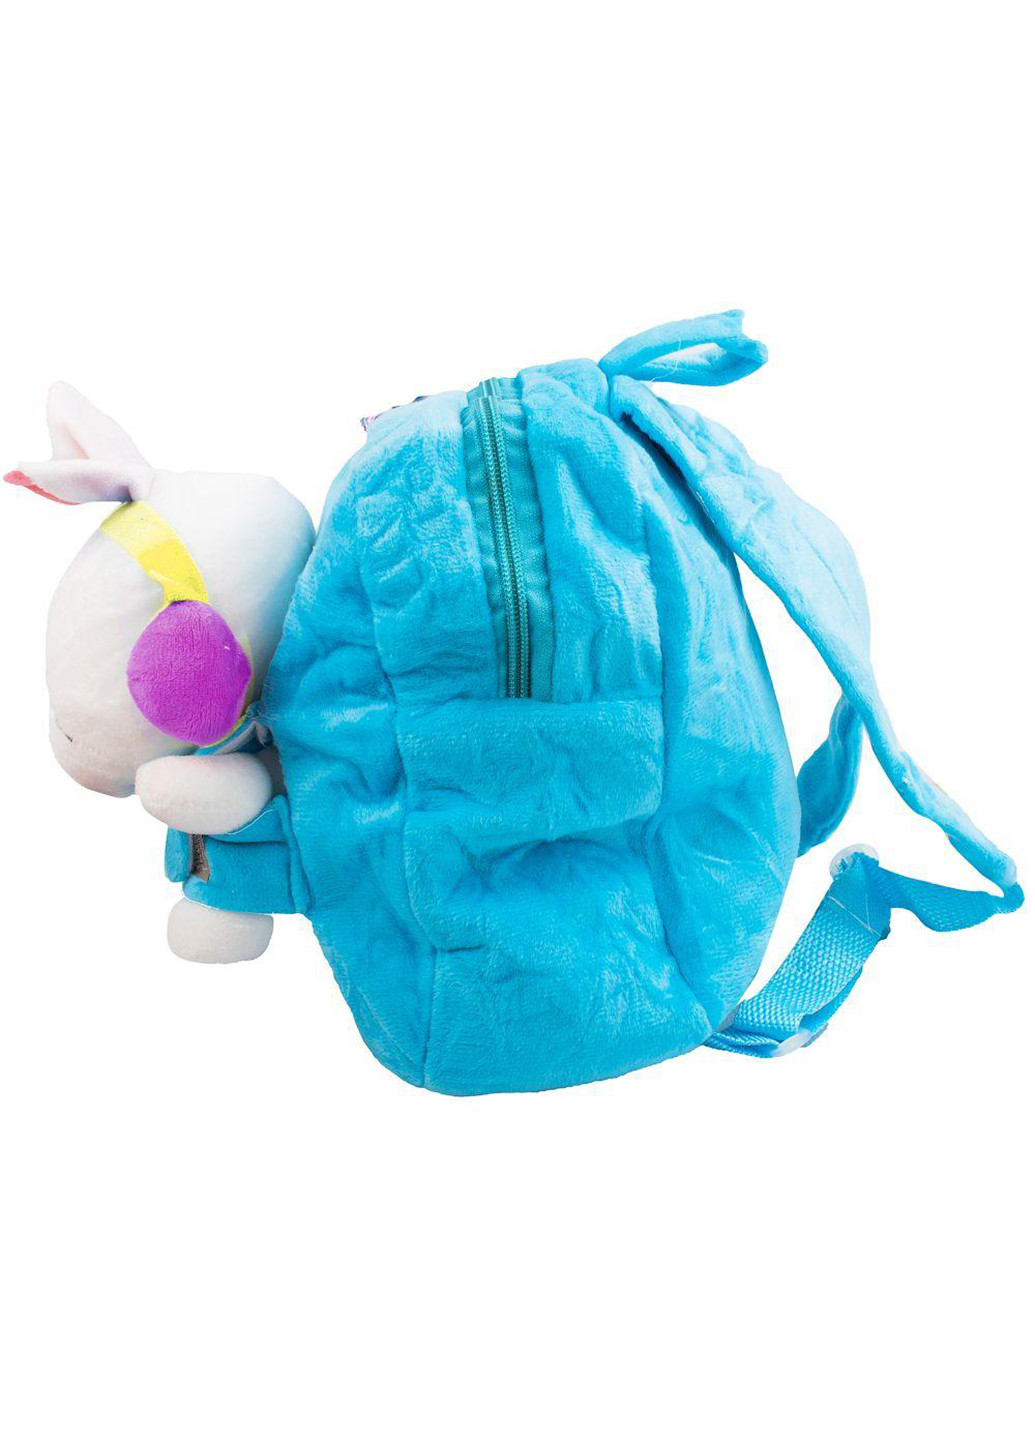 Дитячий рюкзак 20х23х8 см Valiria Fashion (232989588)